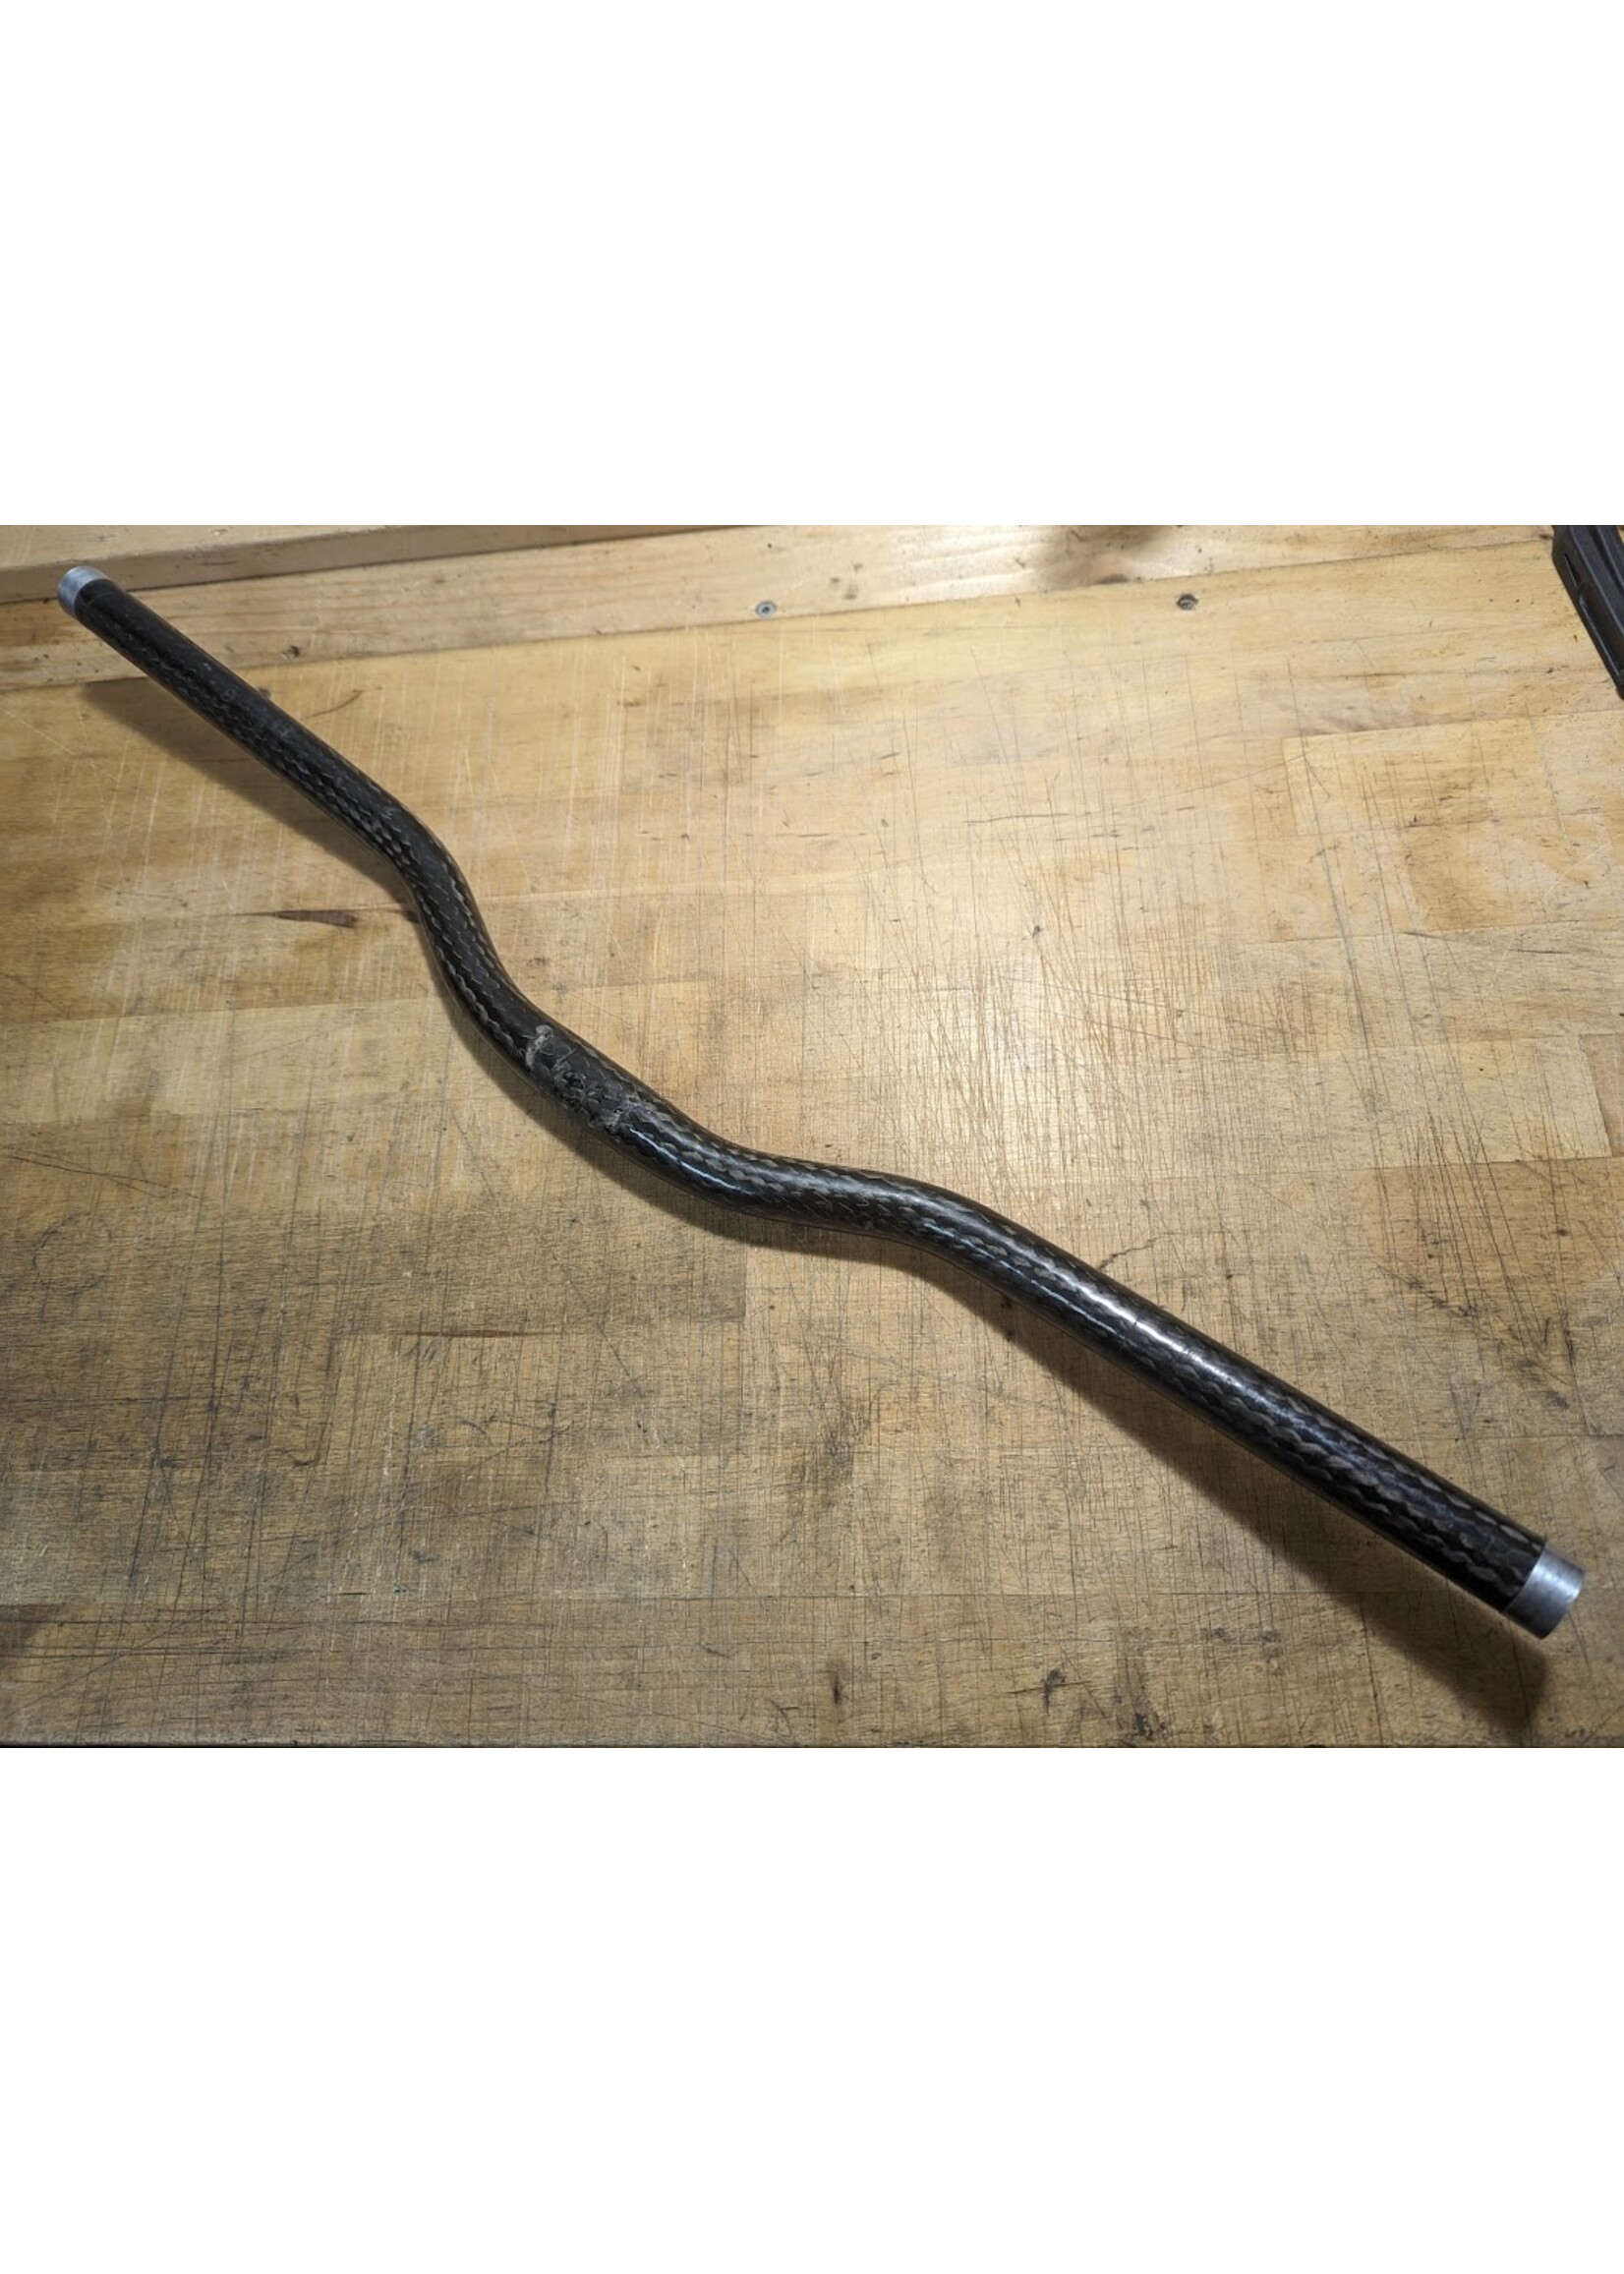 PROFILE Fiber RS riser bars. 25.4 clamp.  NOT FOR RIDING